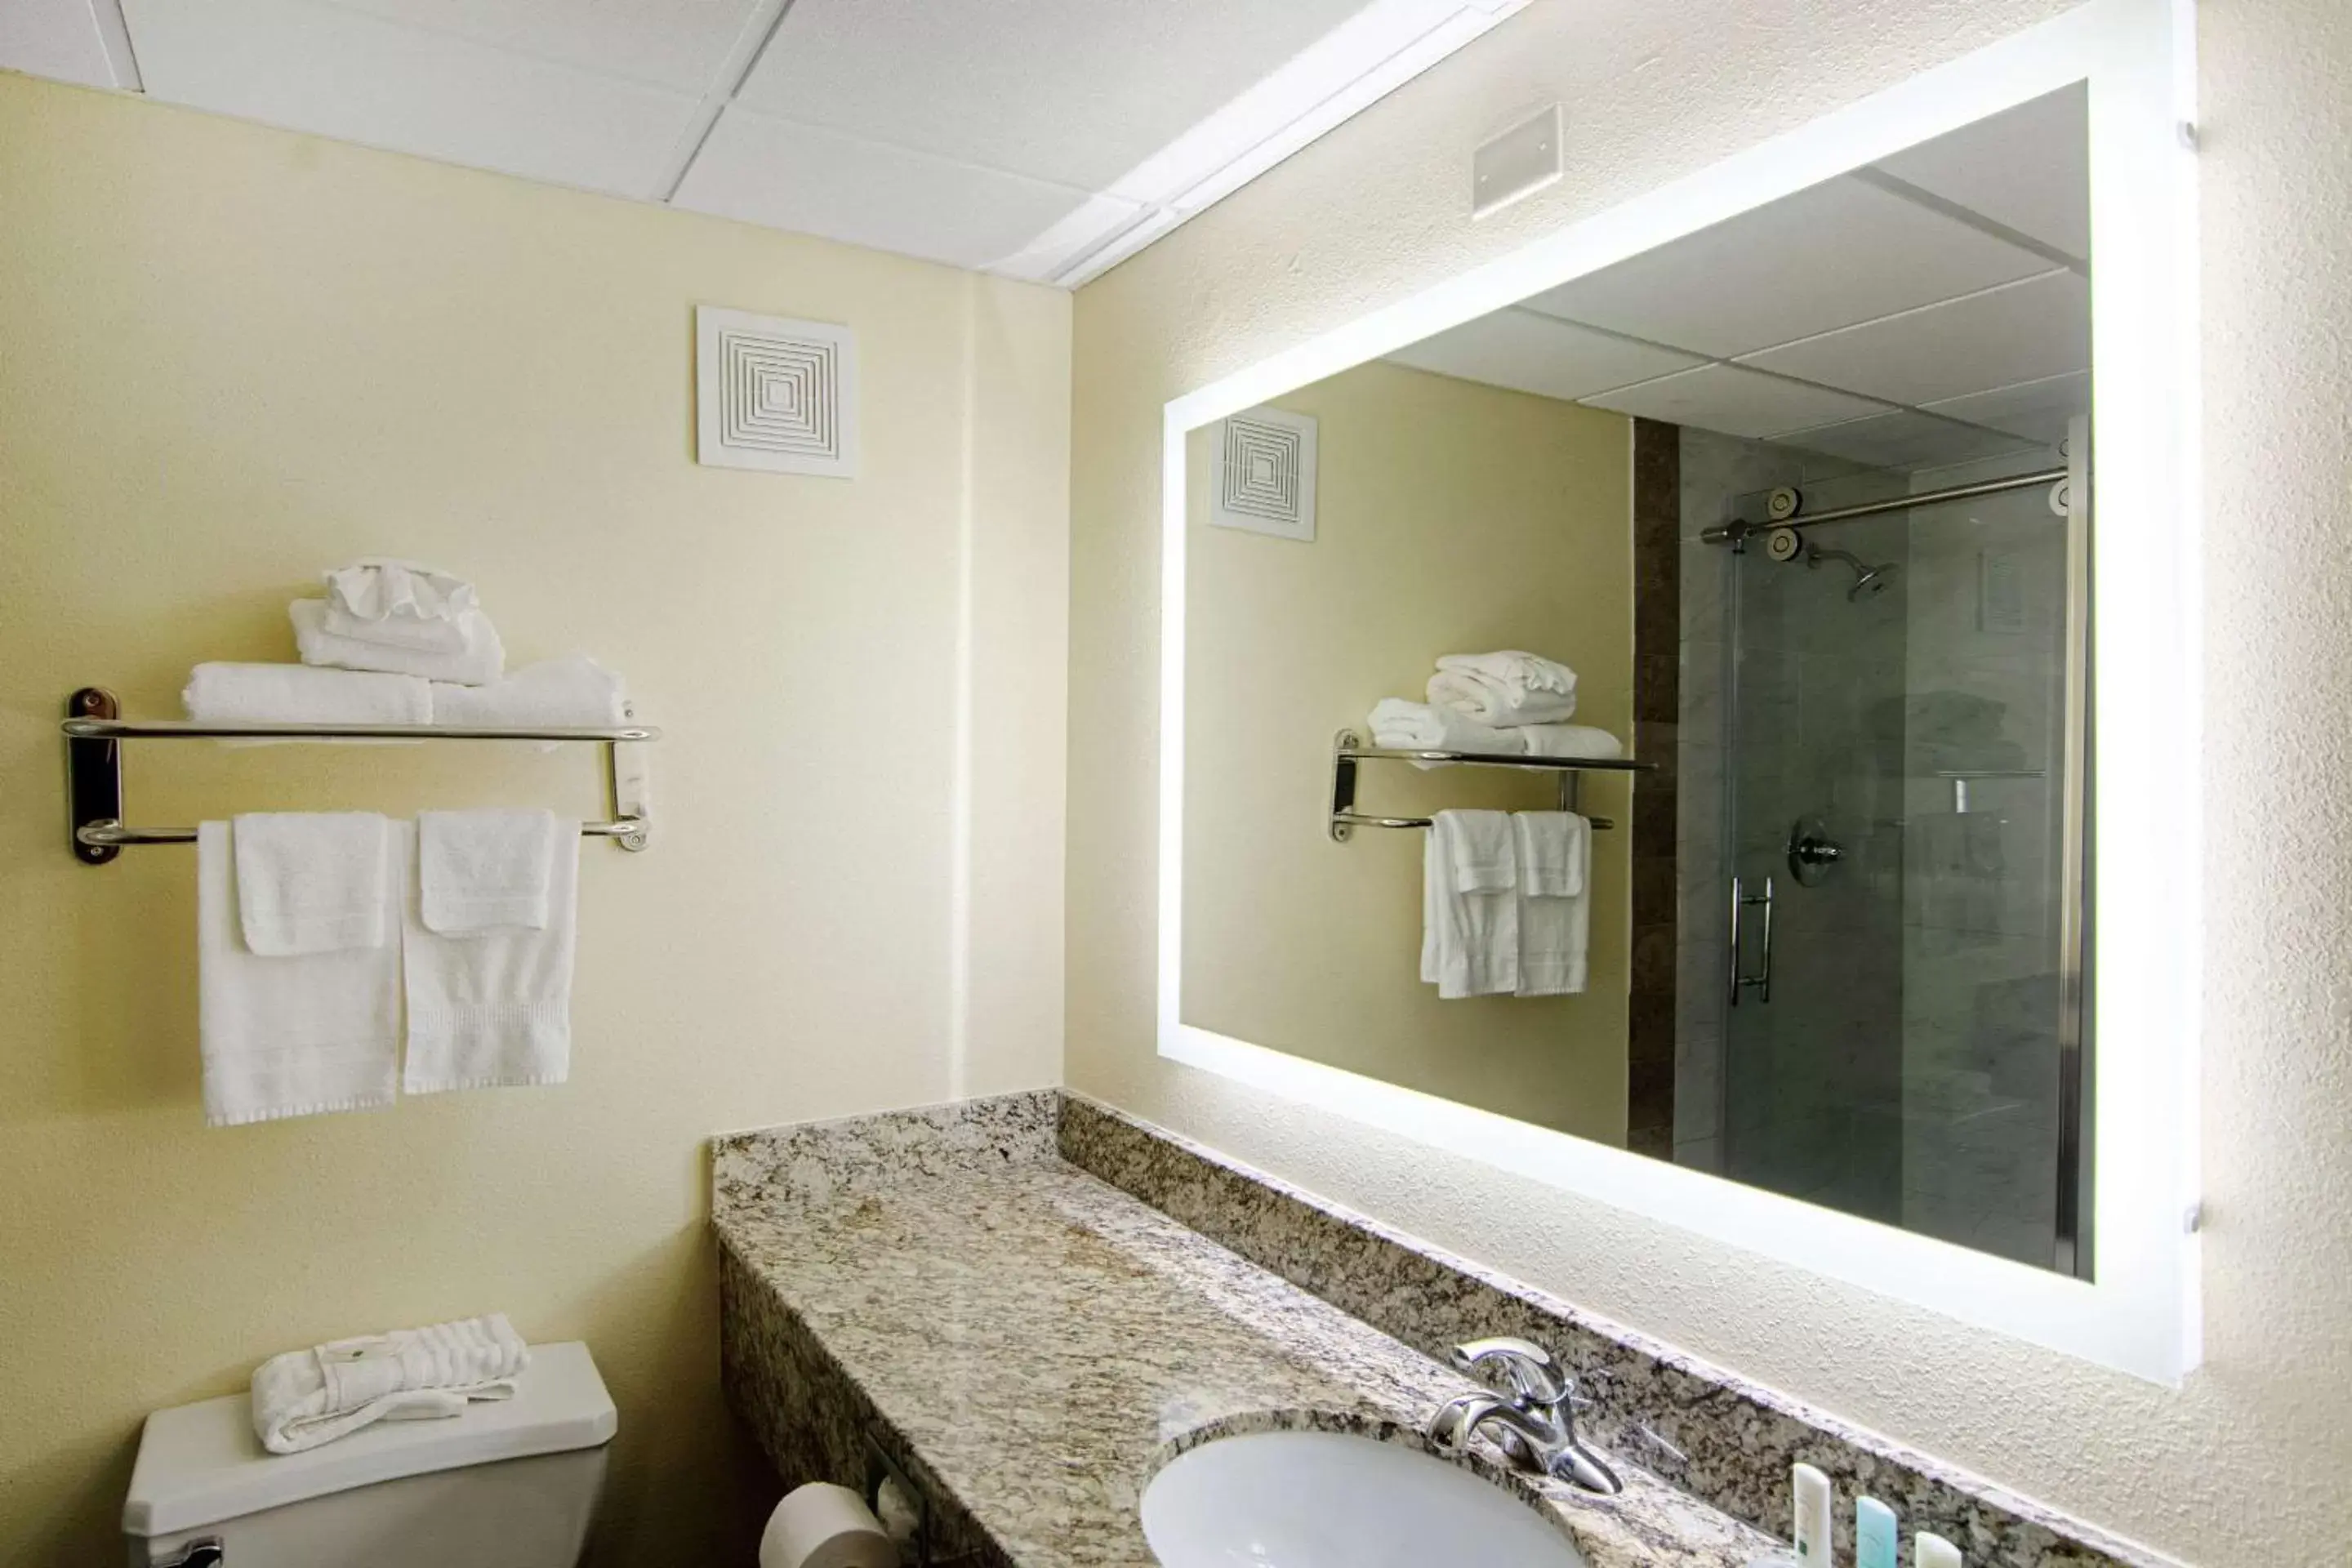 Photo of the whole room, Bathroom in Quality Inn Richburg